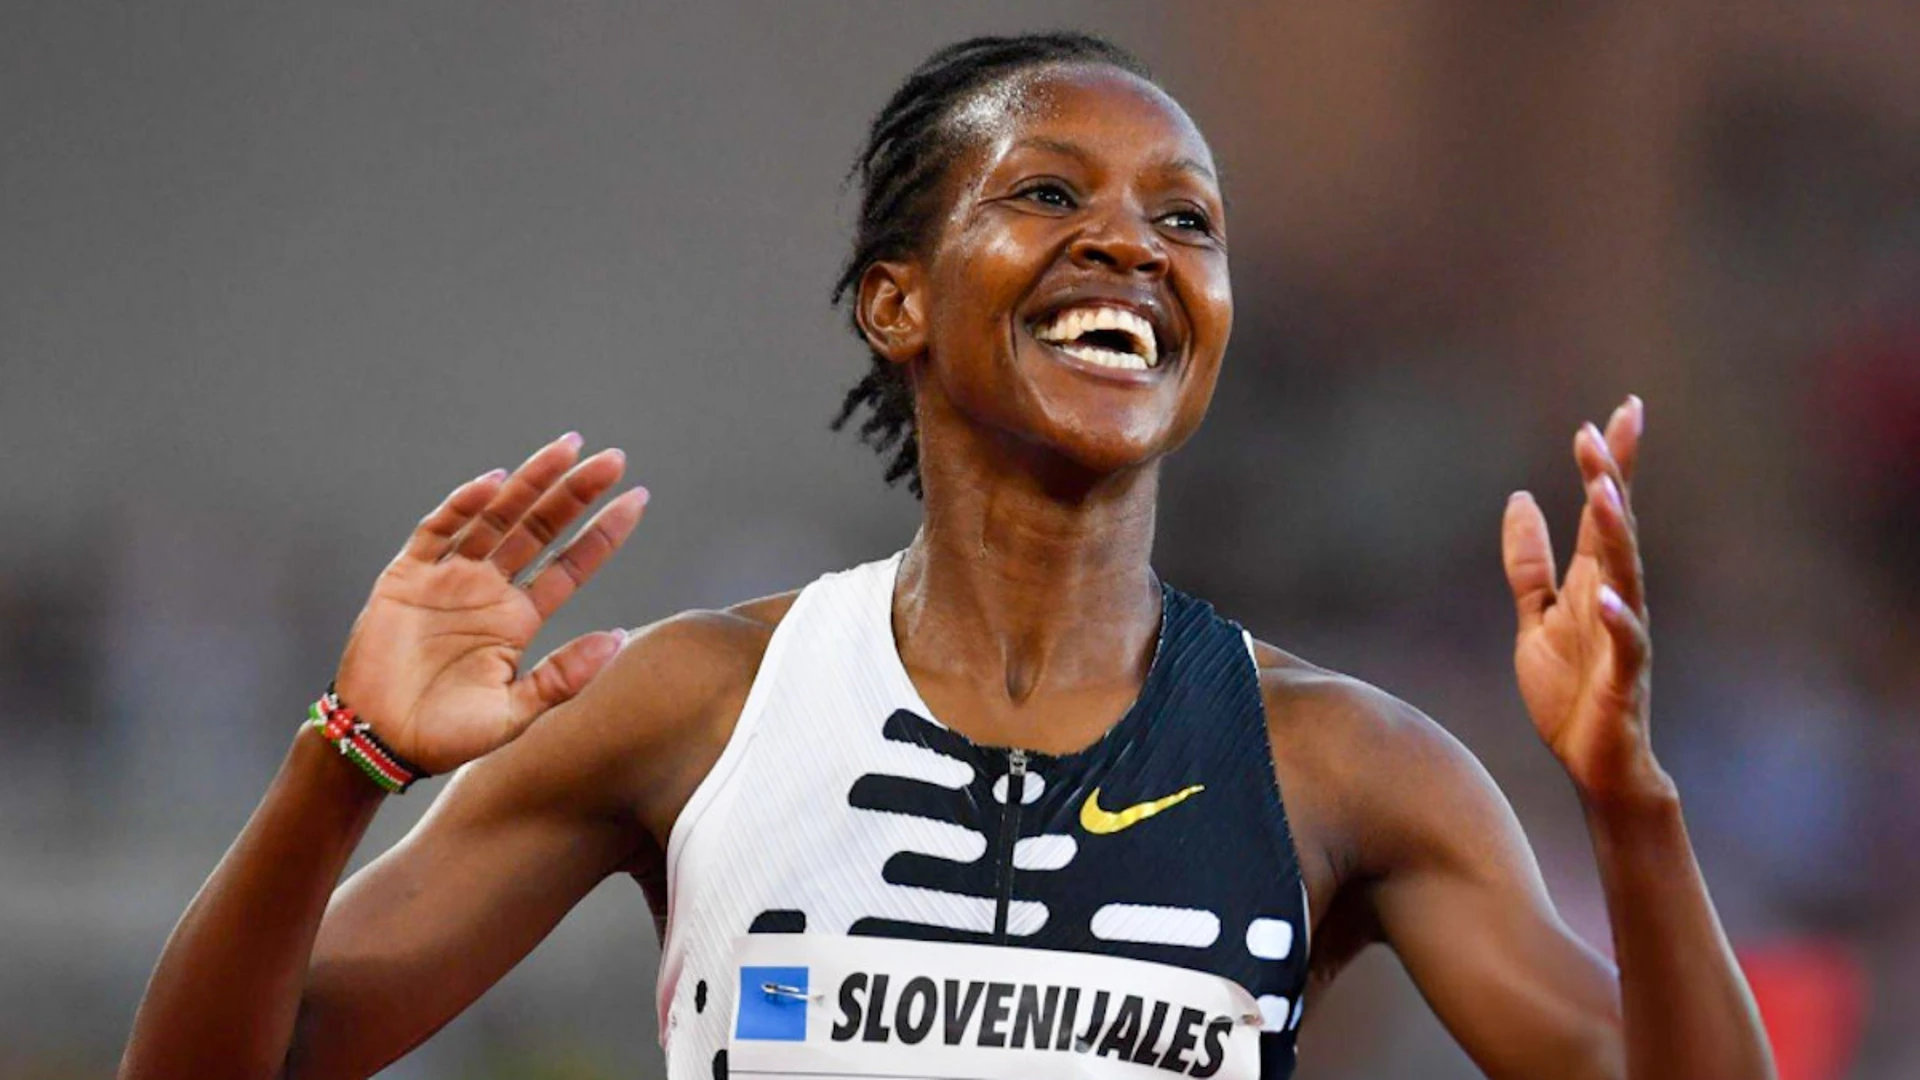 Kenya's Kipyegon improves her 1500m world record